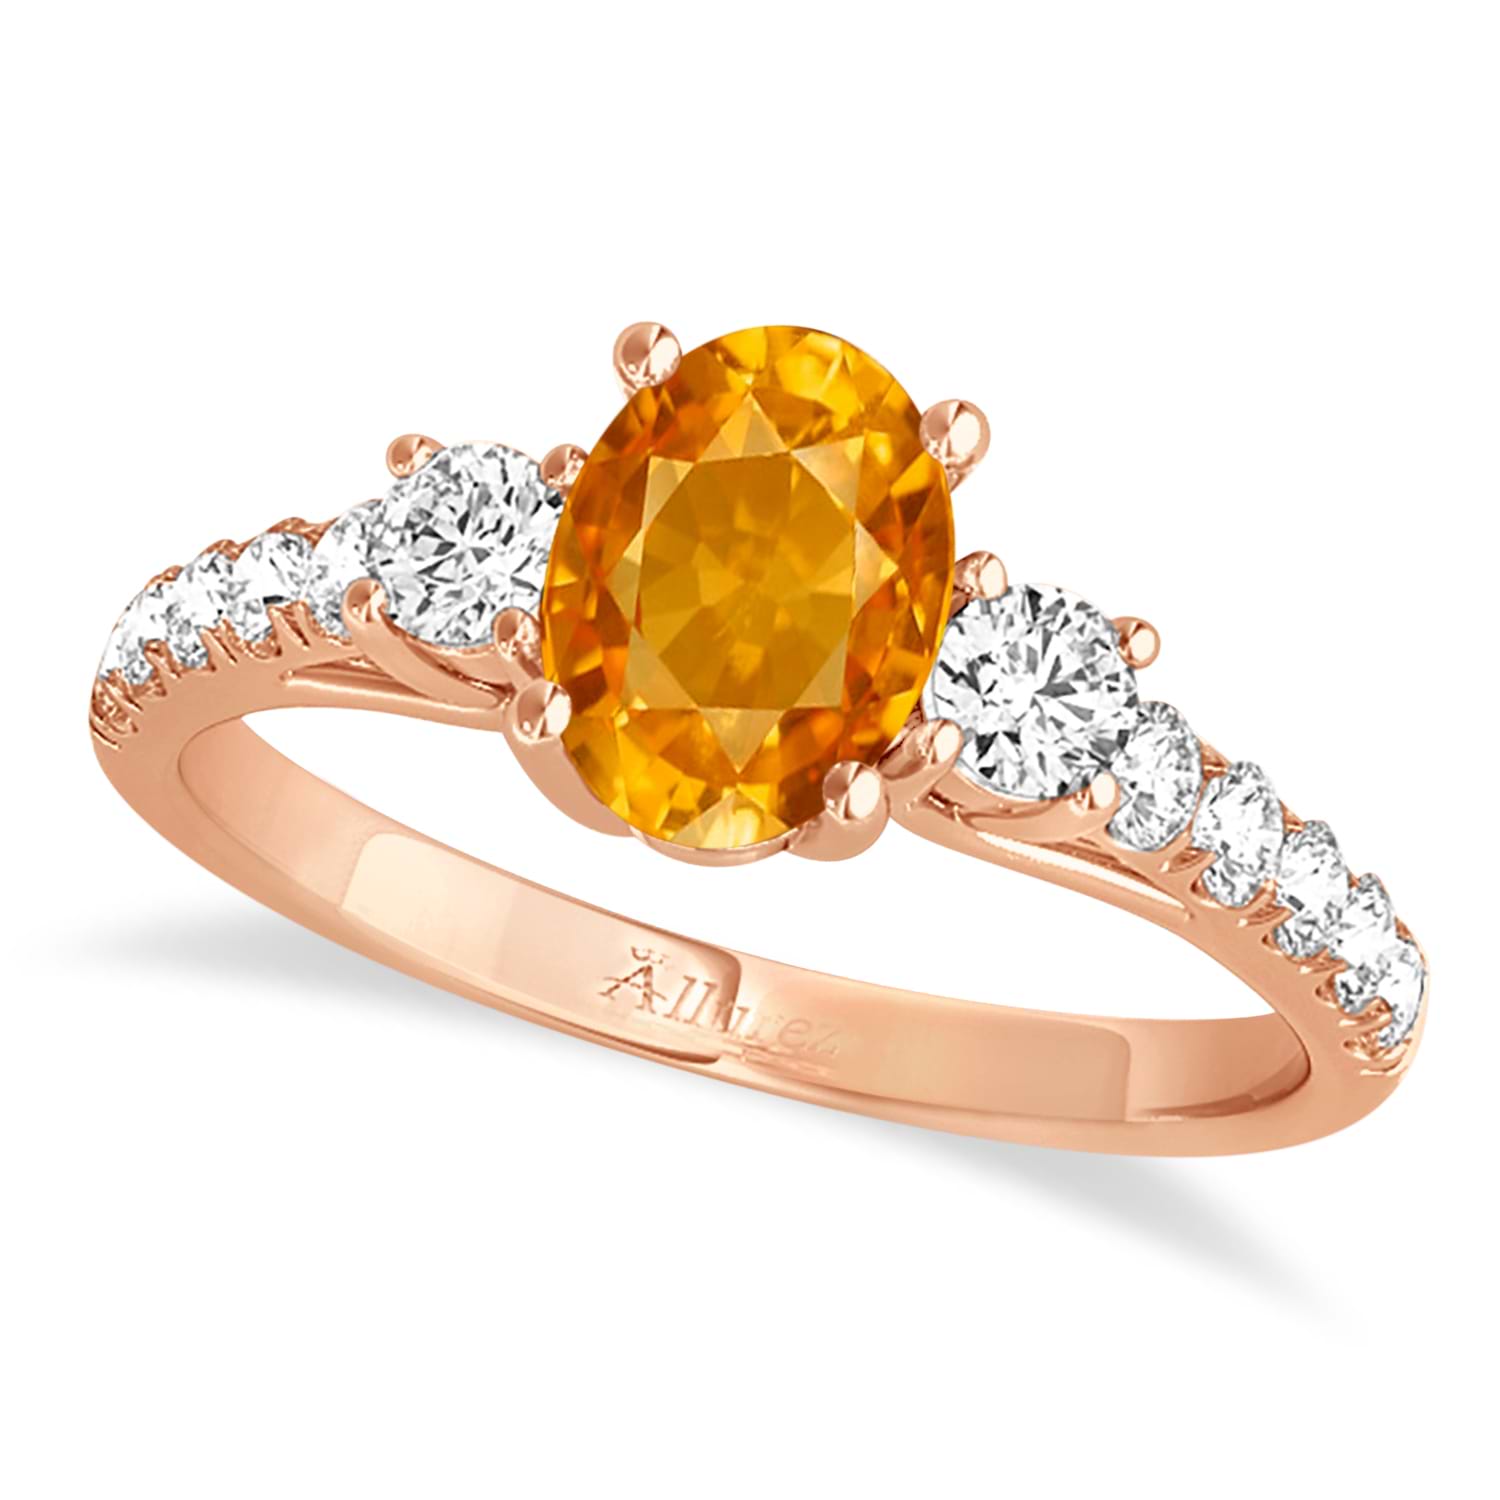 Oval Cut Citrine & Diamond Engagement Ring 18k Rose Gold (1.40ct)